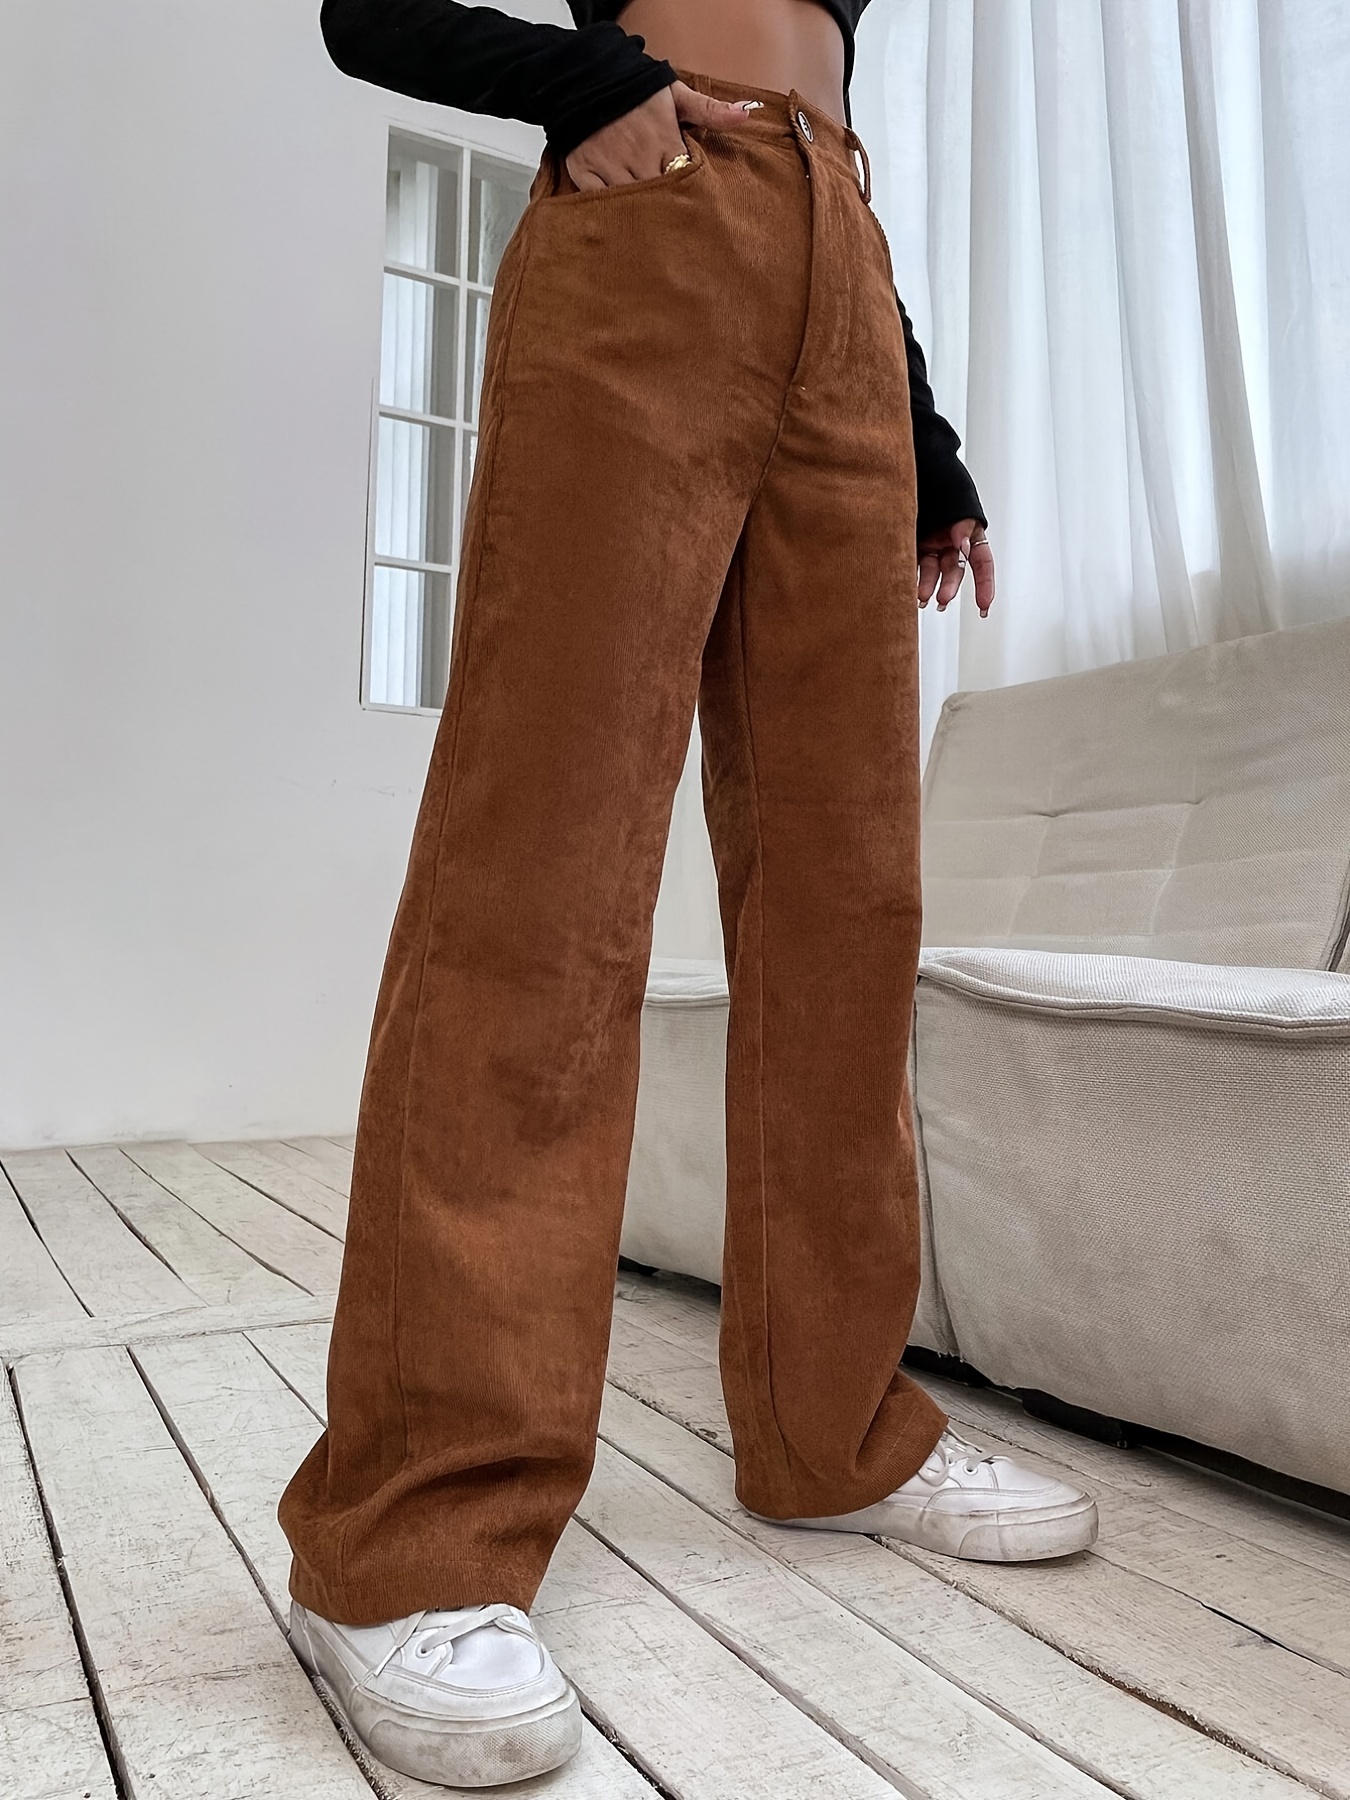 HHei_K Women's High Waist Casual Pants Solid Color Corduroy Loose Straight  Leg Trousers Women cargo pants women 